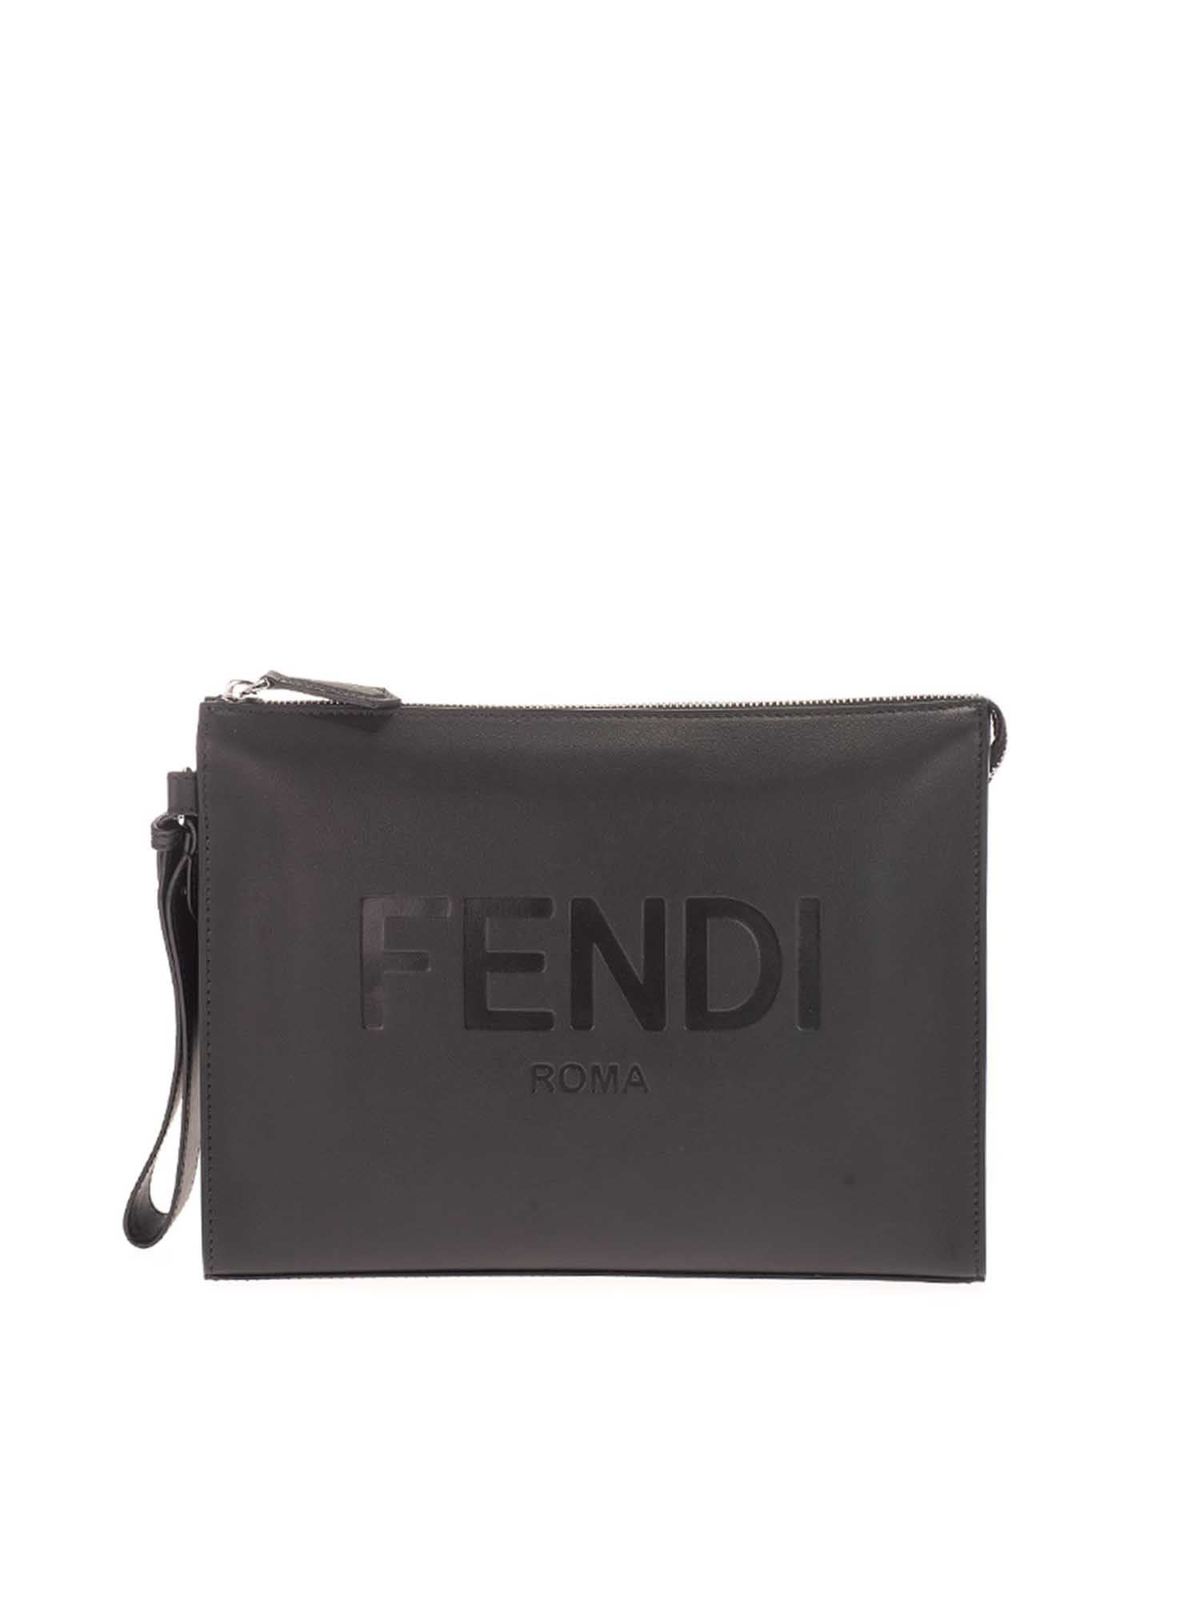 FENDI FENDI ROMA FLAT POUCH BAG IN BLACK